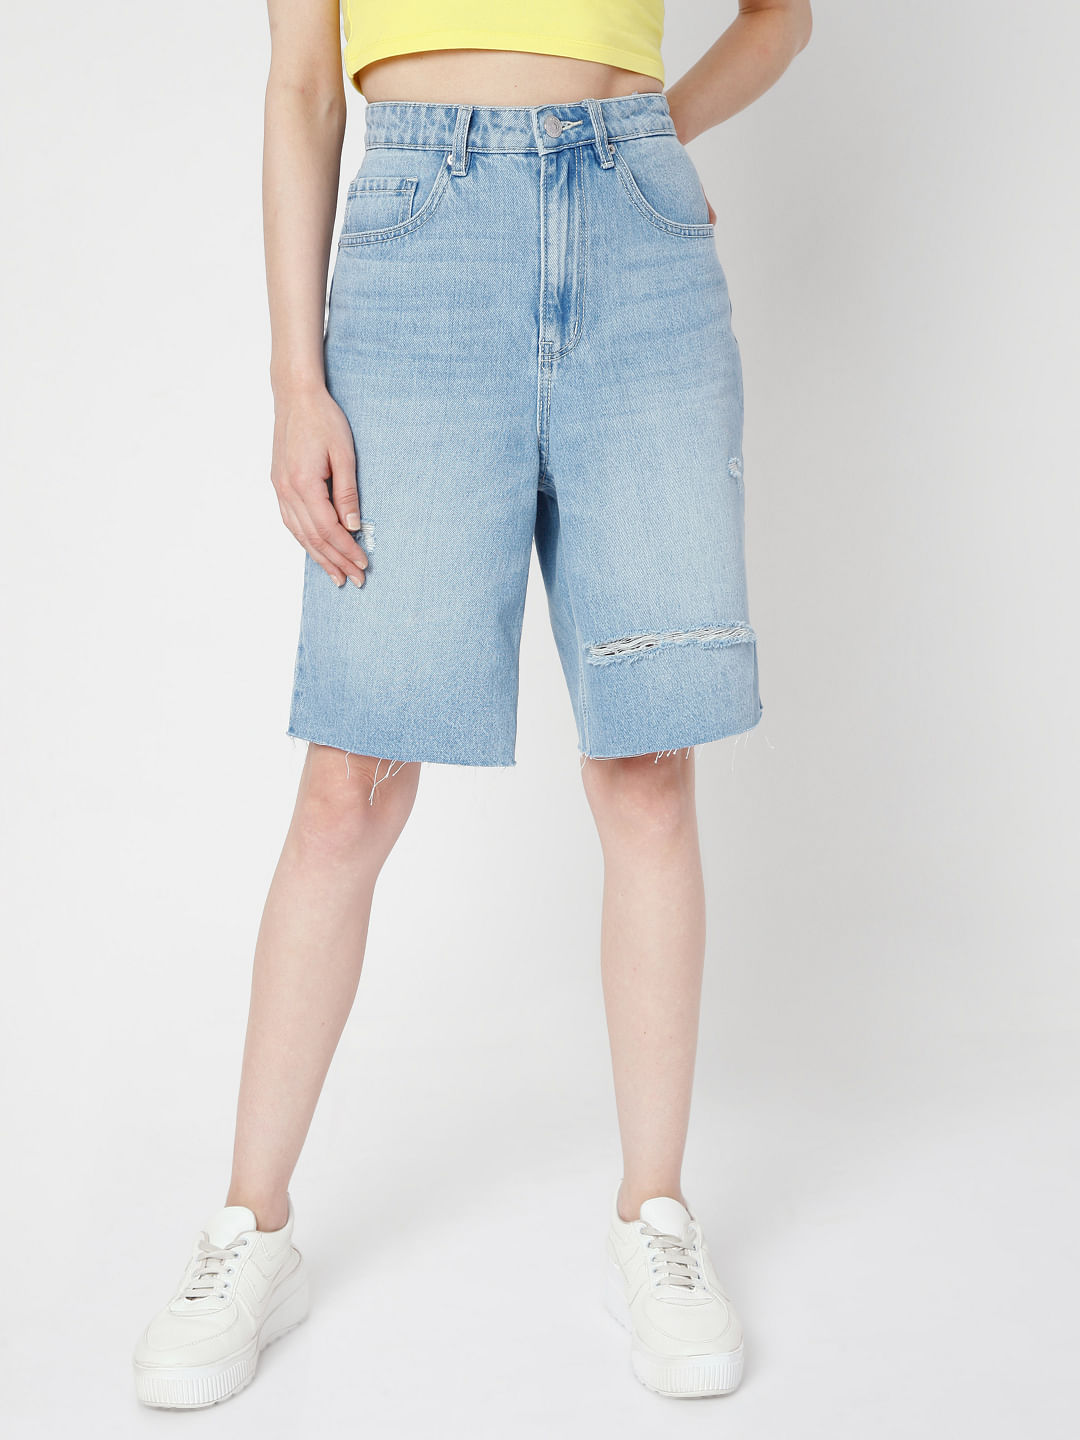 BDG Urban Outfitters CHEEKY SUPER HIGH RISE Blue Denim Jean Short Shorts  28W | eBay